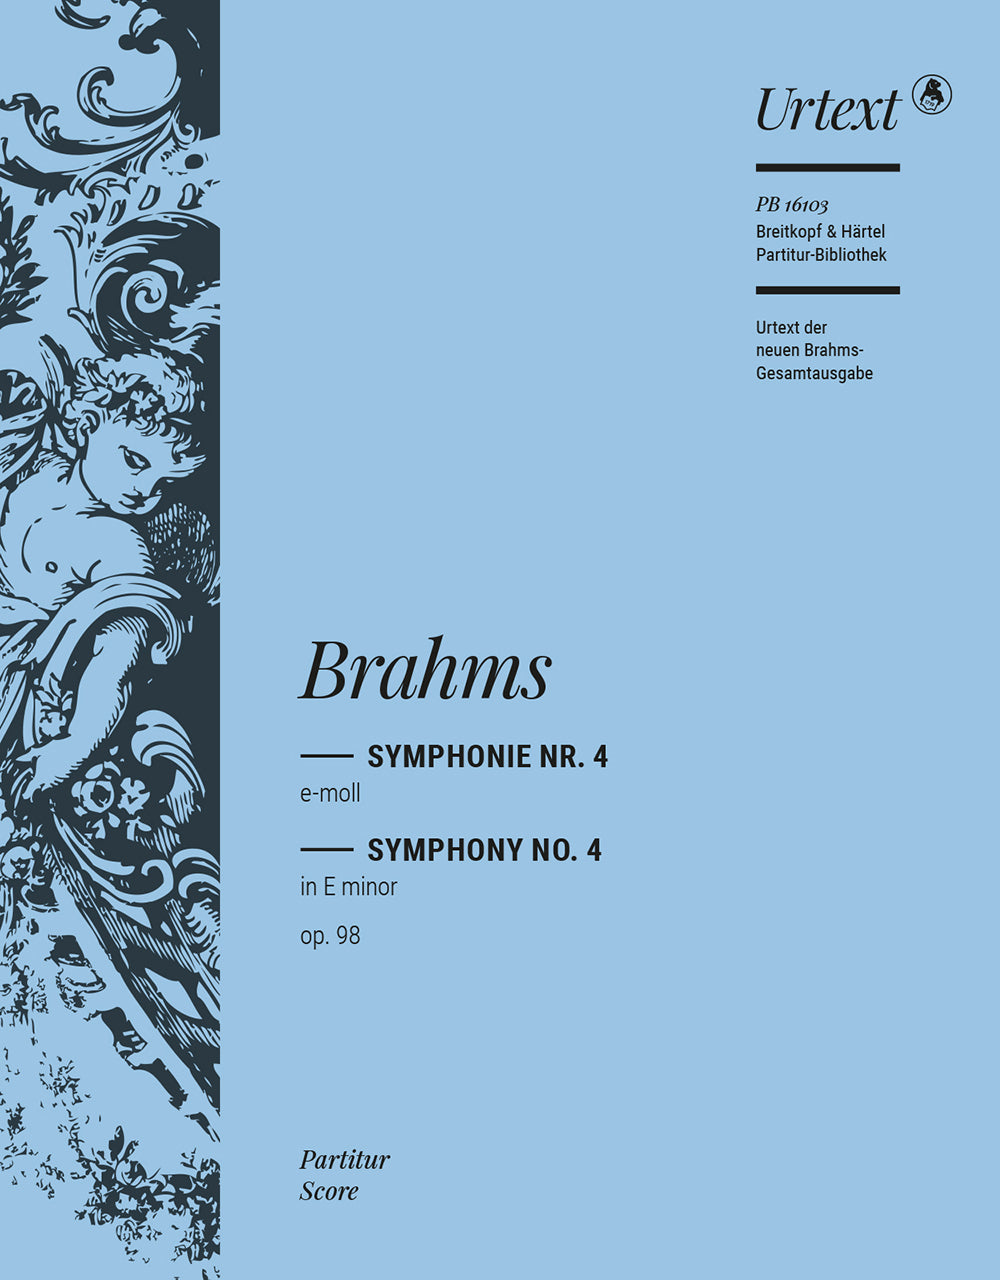 Brahms Symphony No. 4 in E minor Op. 98